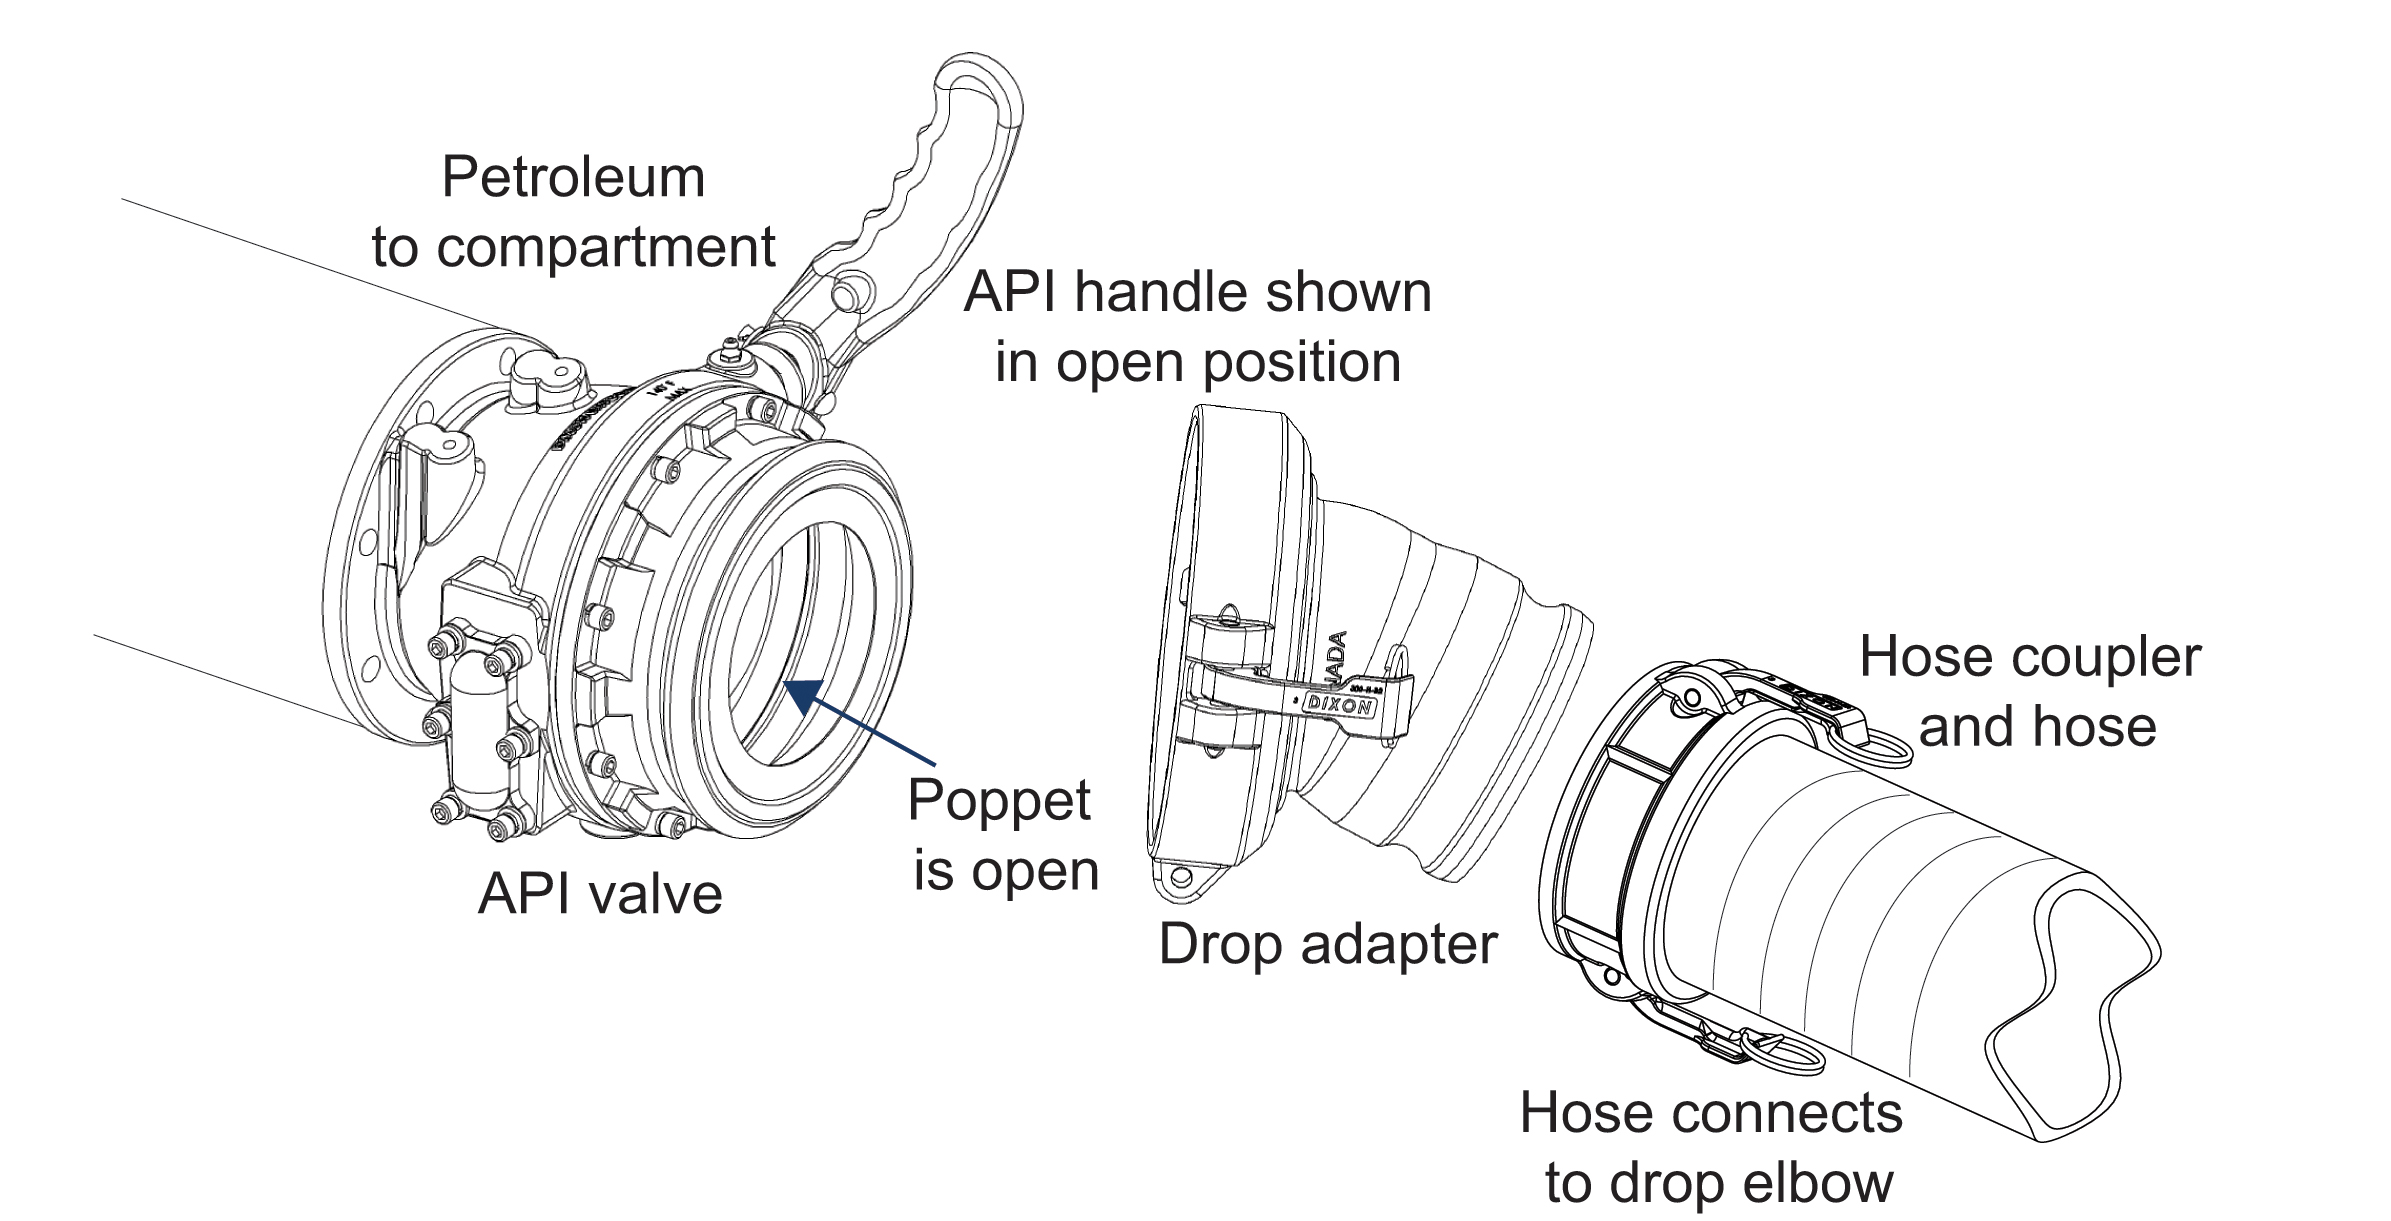 API valve connection to drop hose